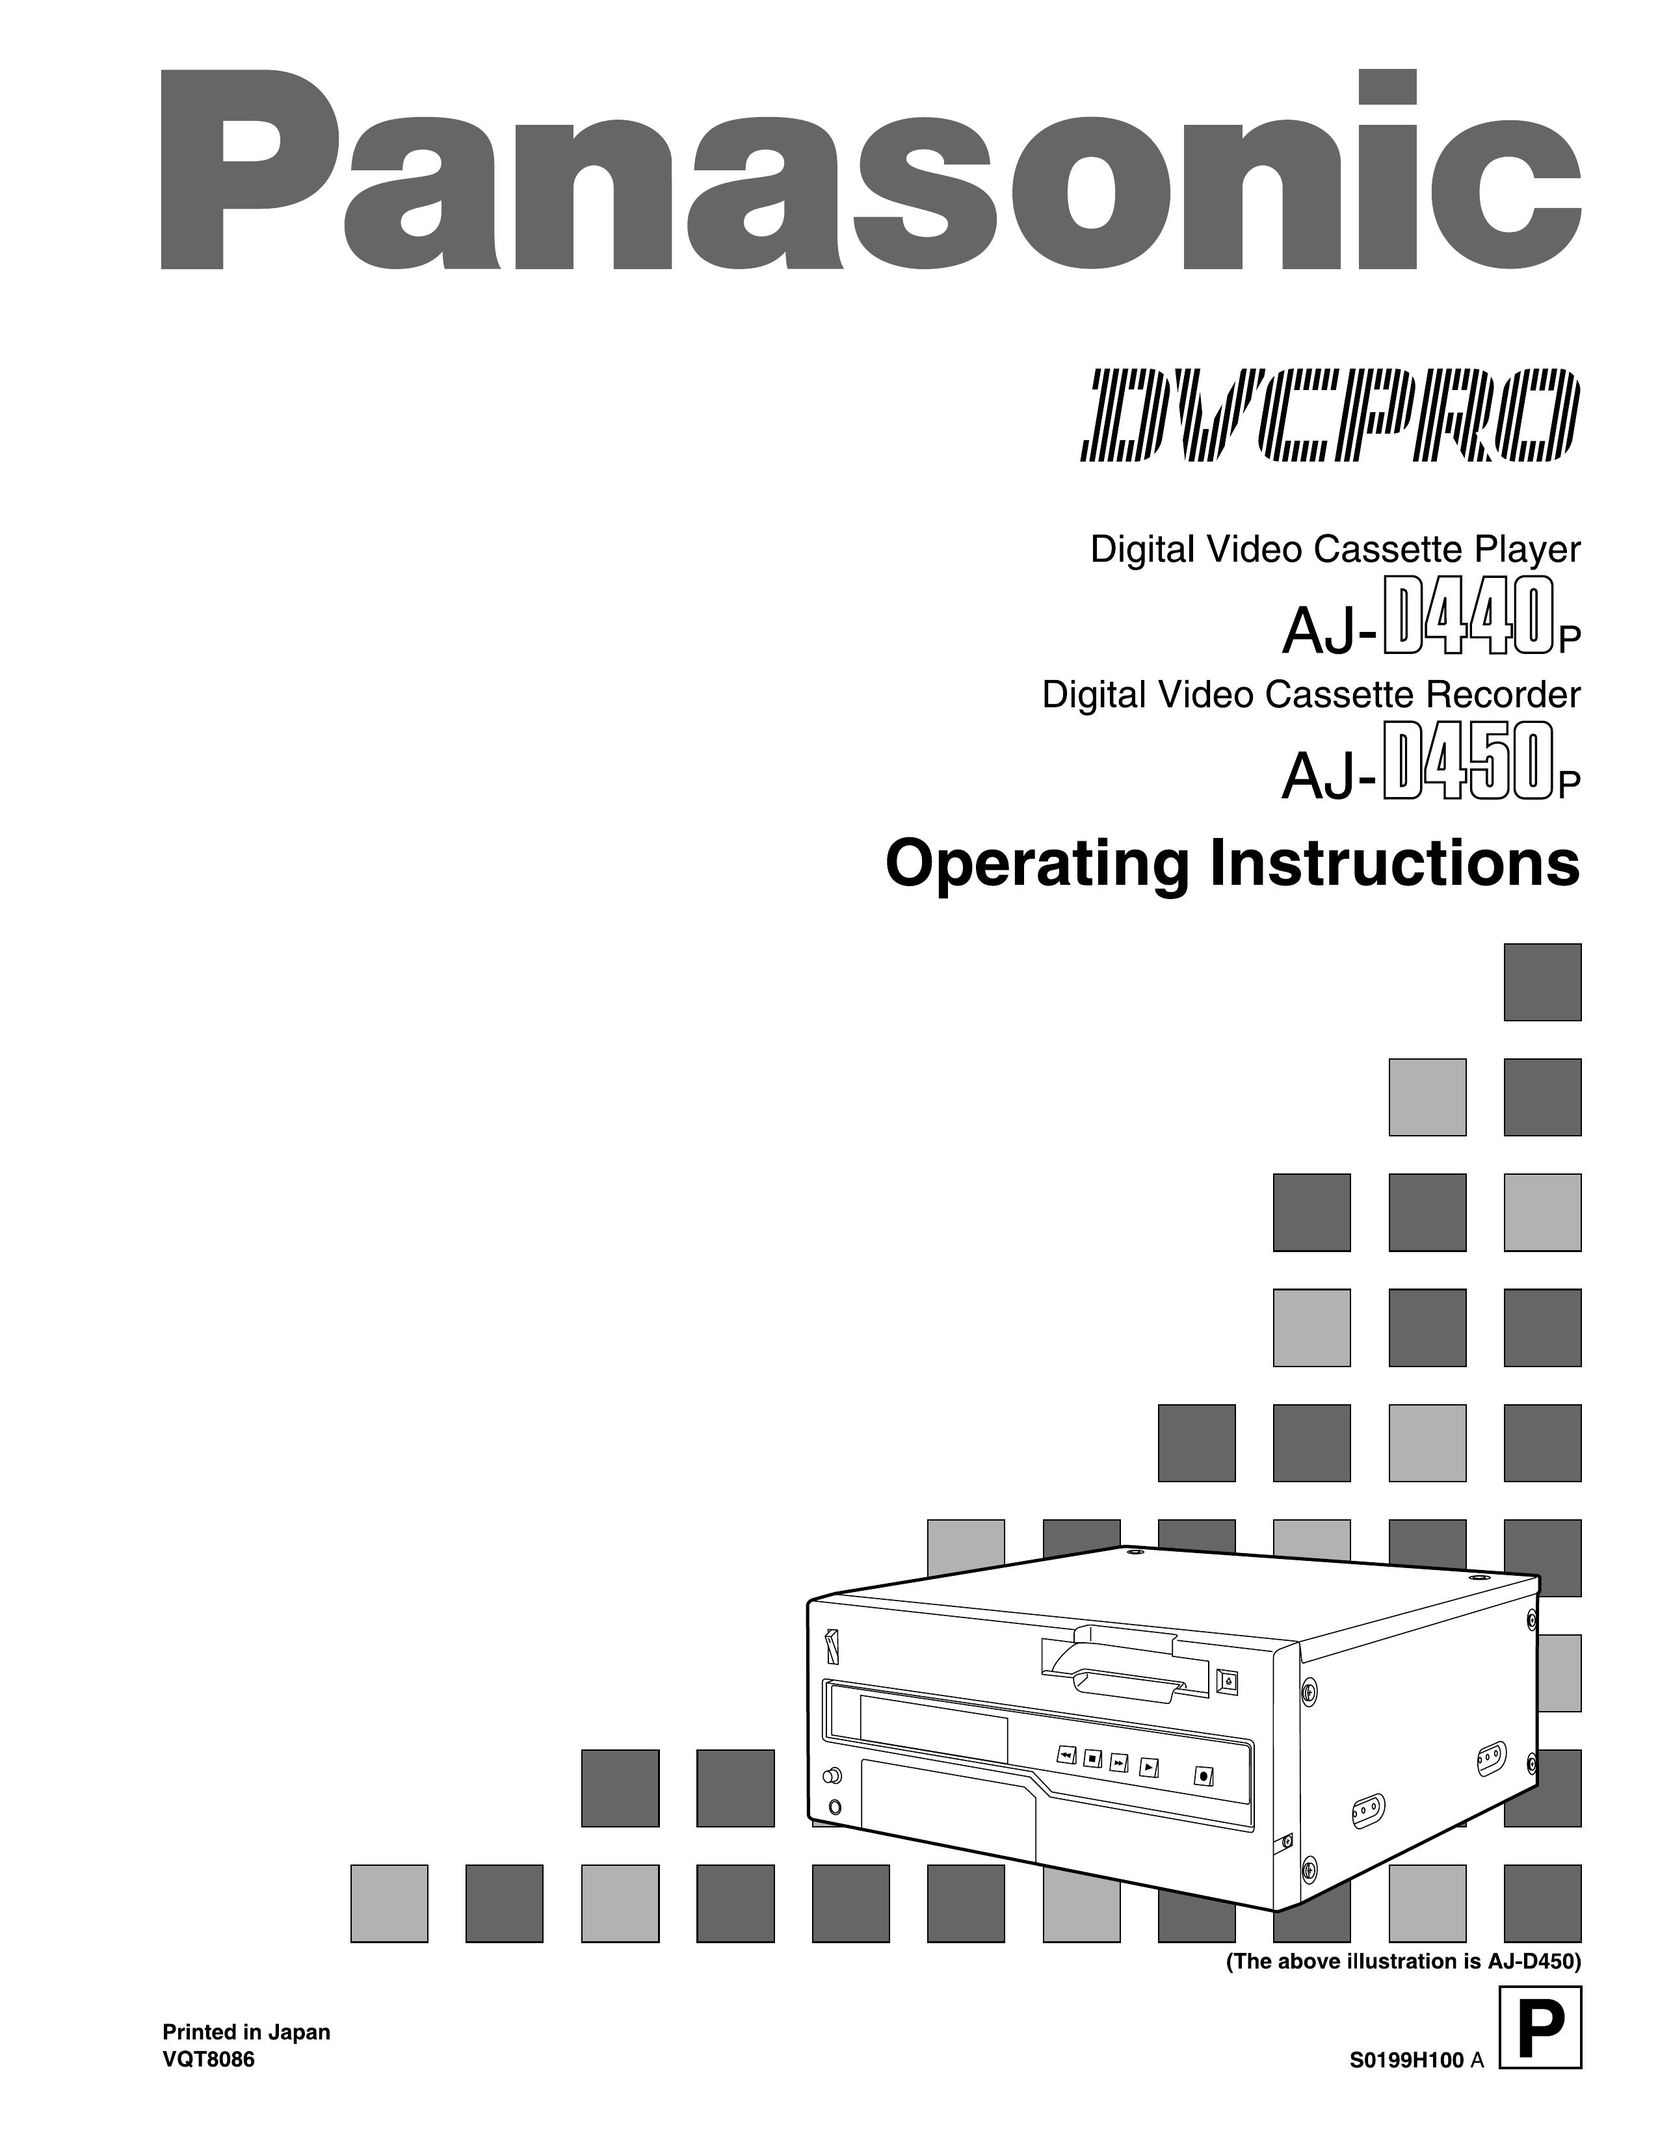 Panasonic AJ-D440 VCR User Manual